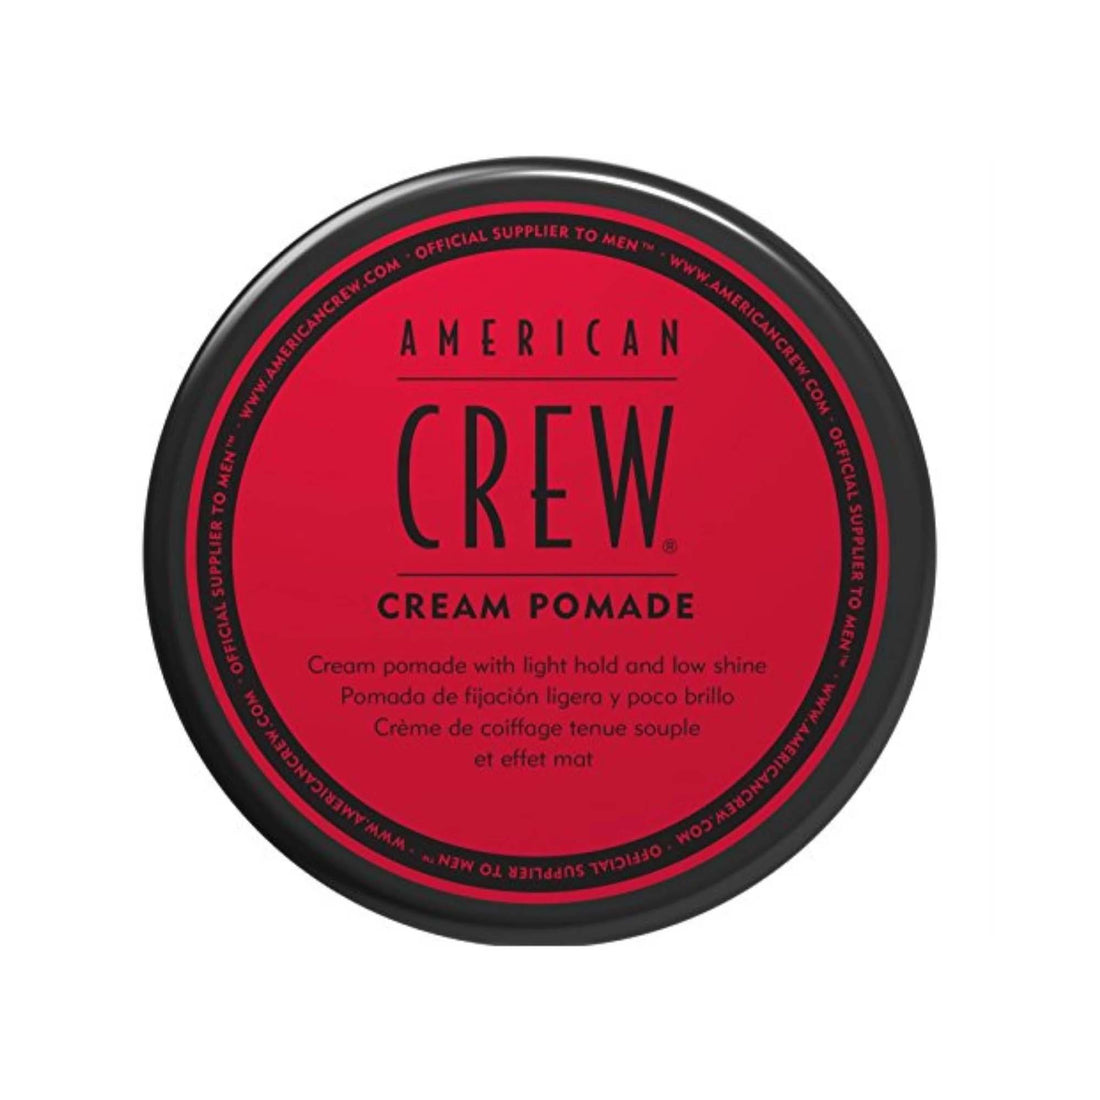 American Crew Cream Pomade 3oz | Essence Beauty Supply Pismo Beach